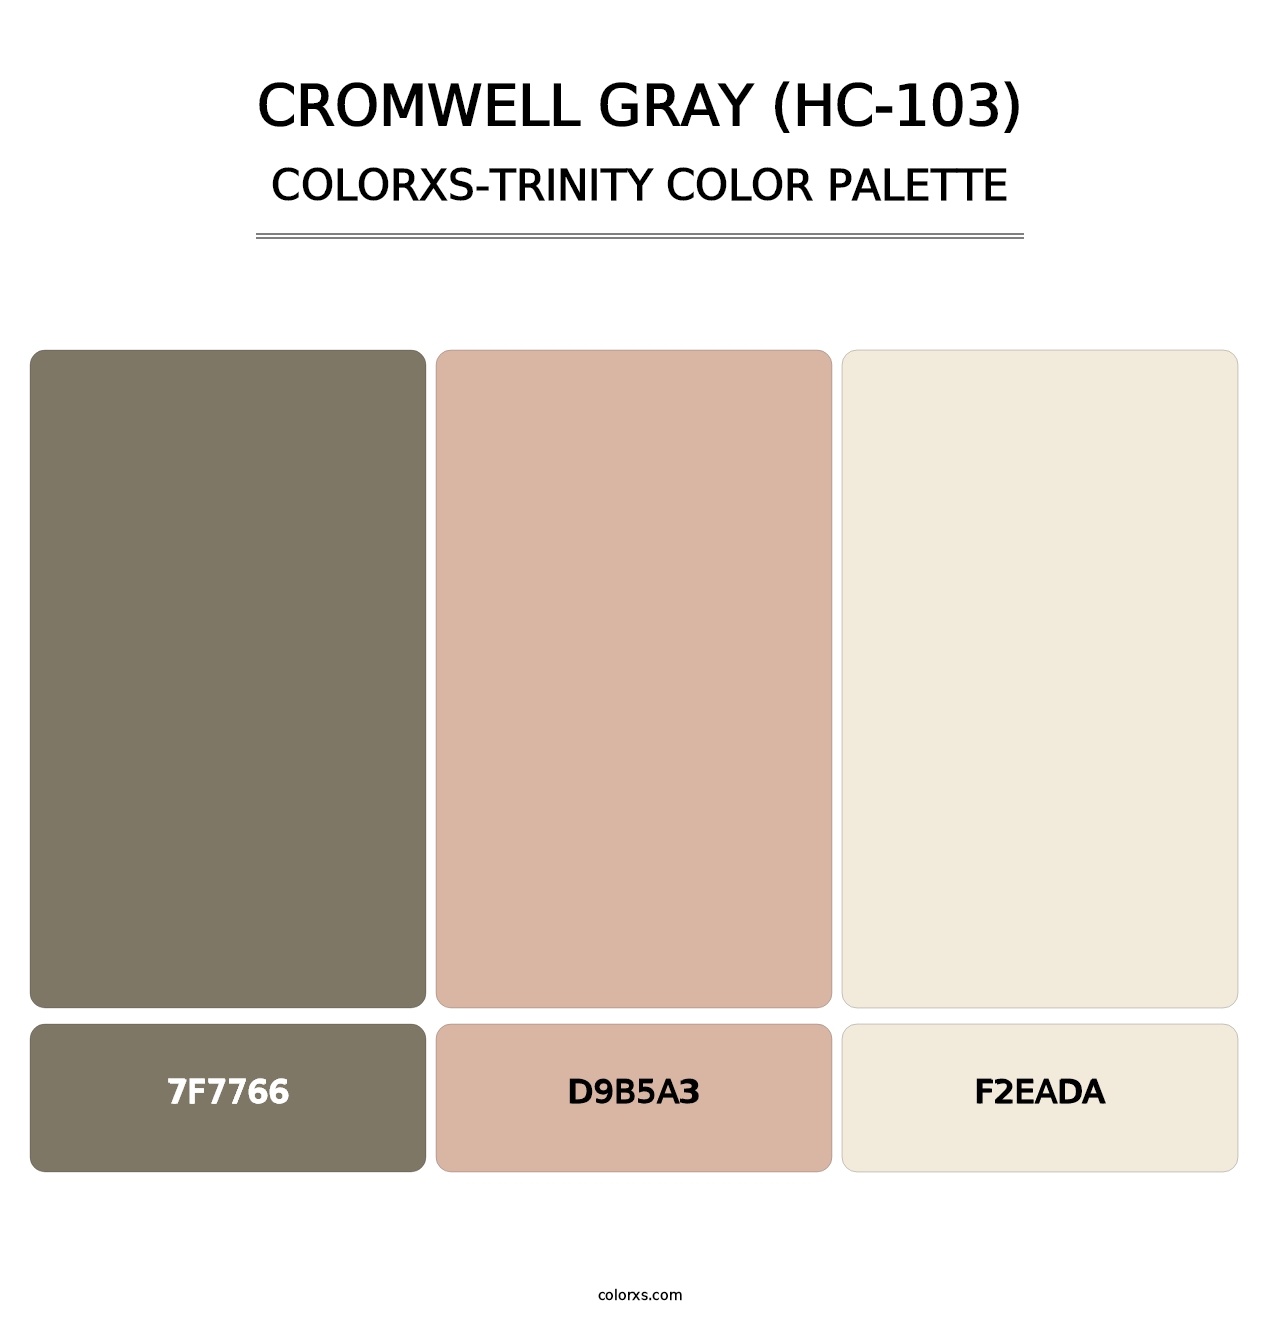 Cromwell Gray (HC-103) - Colorxs Trinity Palette